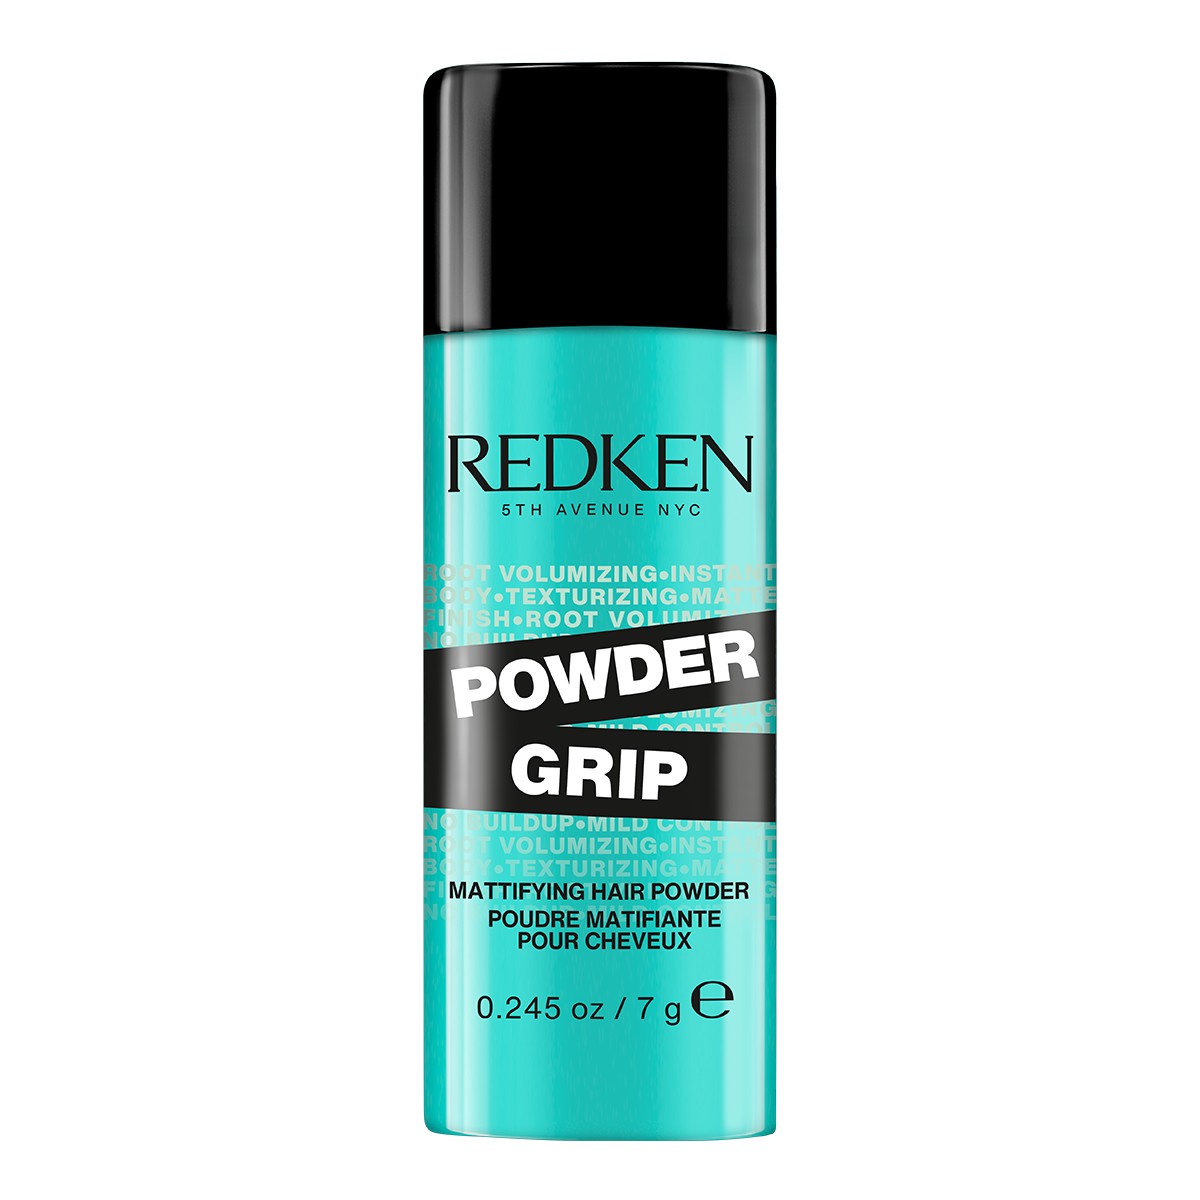 Redken-2022-EU-Texture-Powder-Grip-7g-Ecom-ATF-Packshot-1200×1200